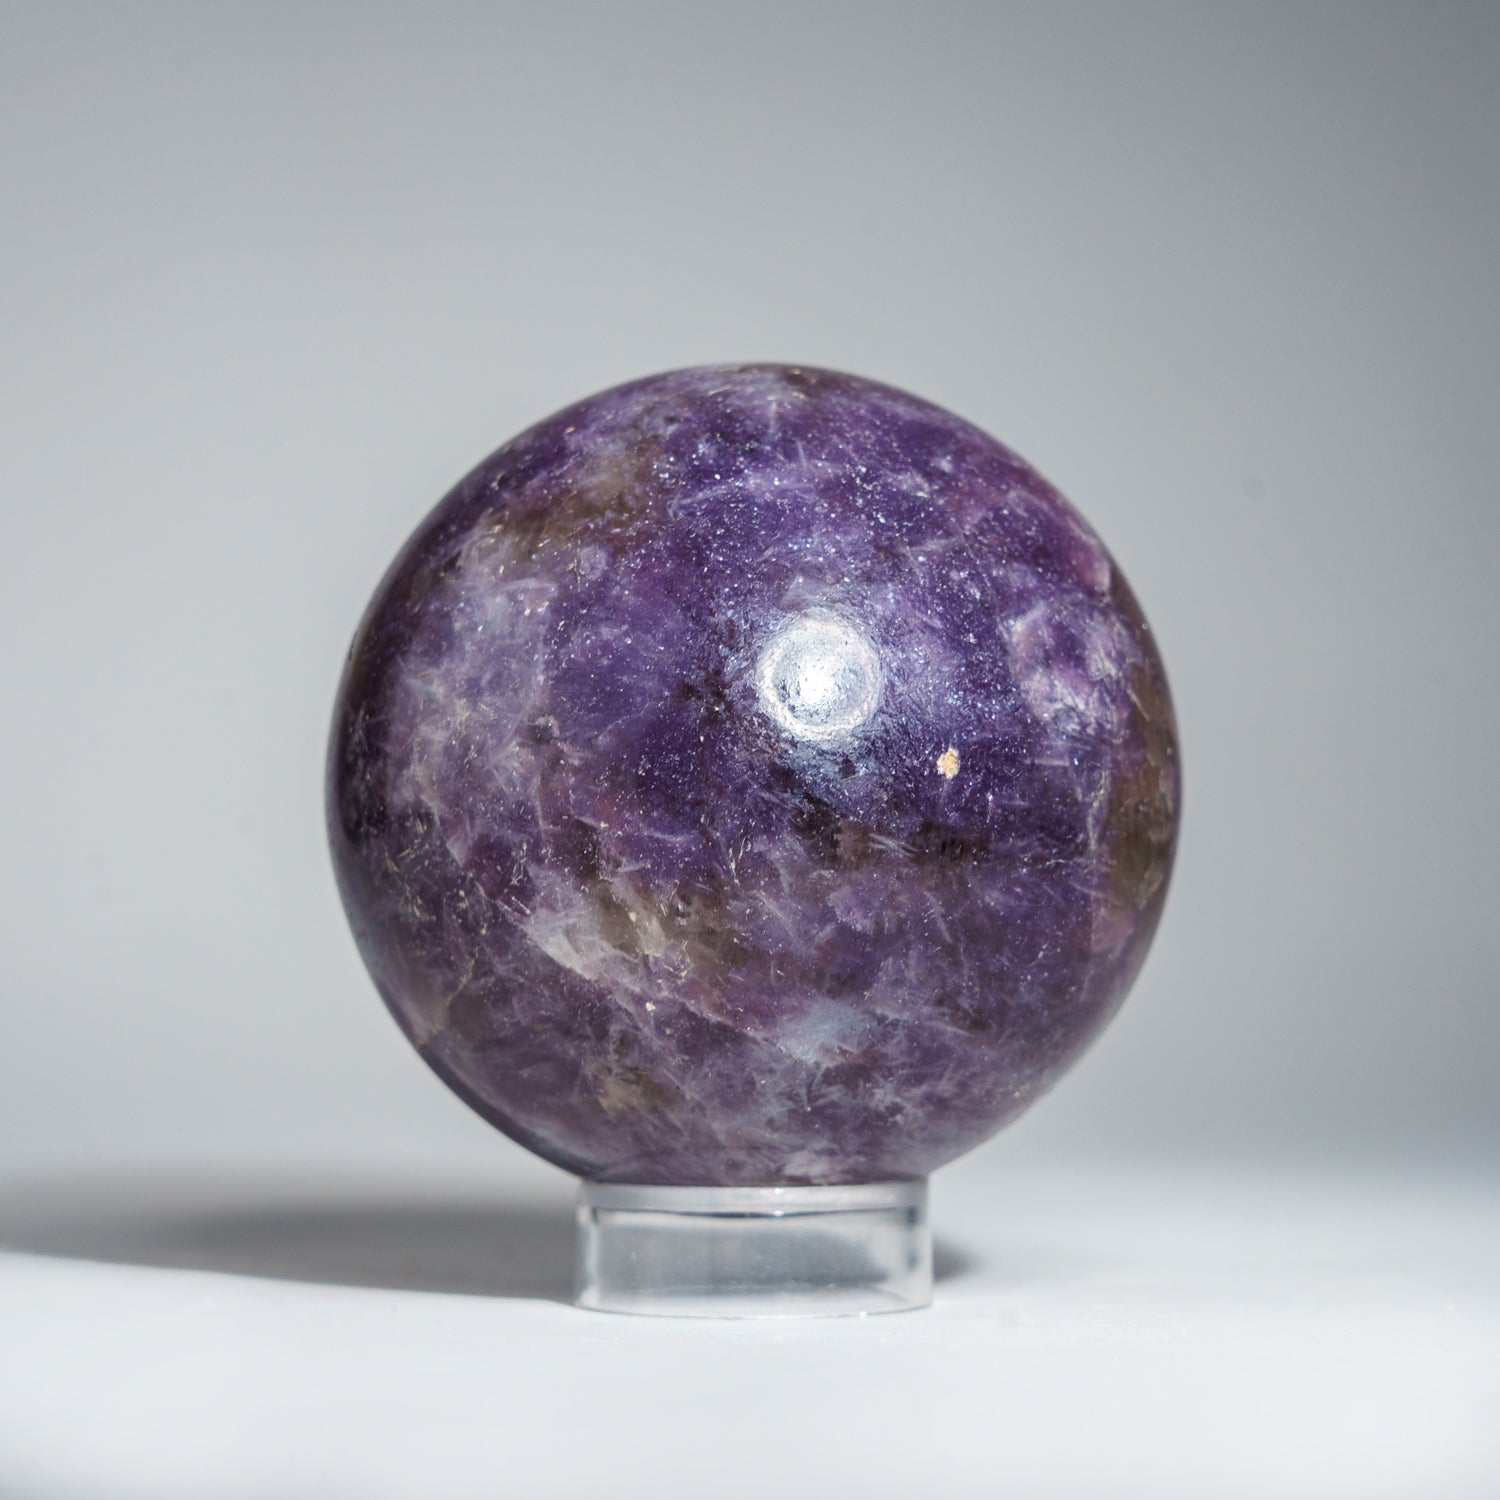 Genuine Polished Gemmy Amethyst Sphere from Brazil (2.5", 1.35 lbs)